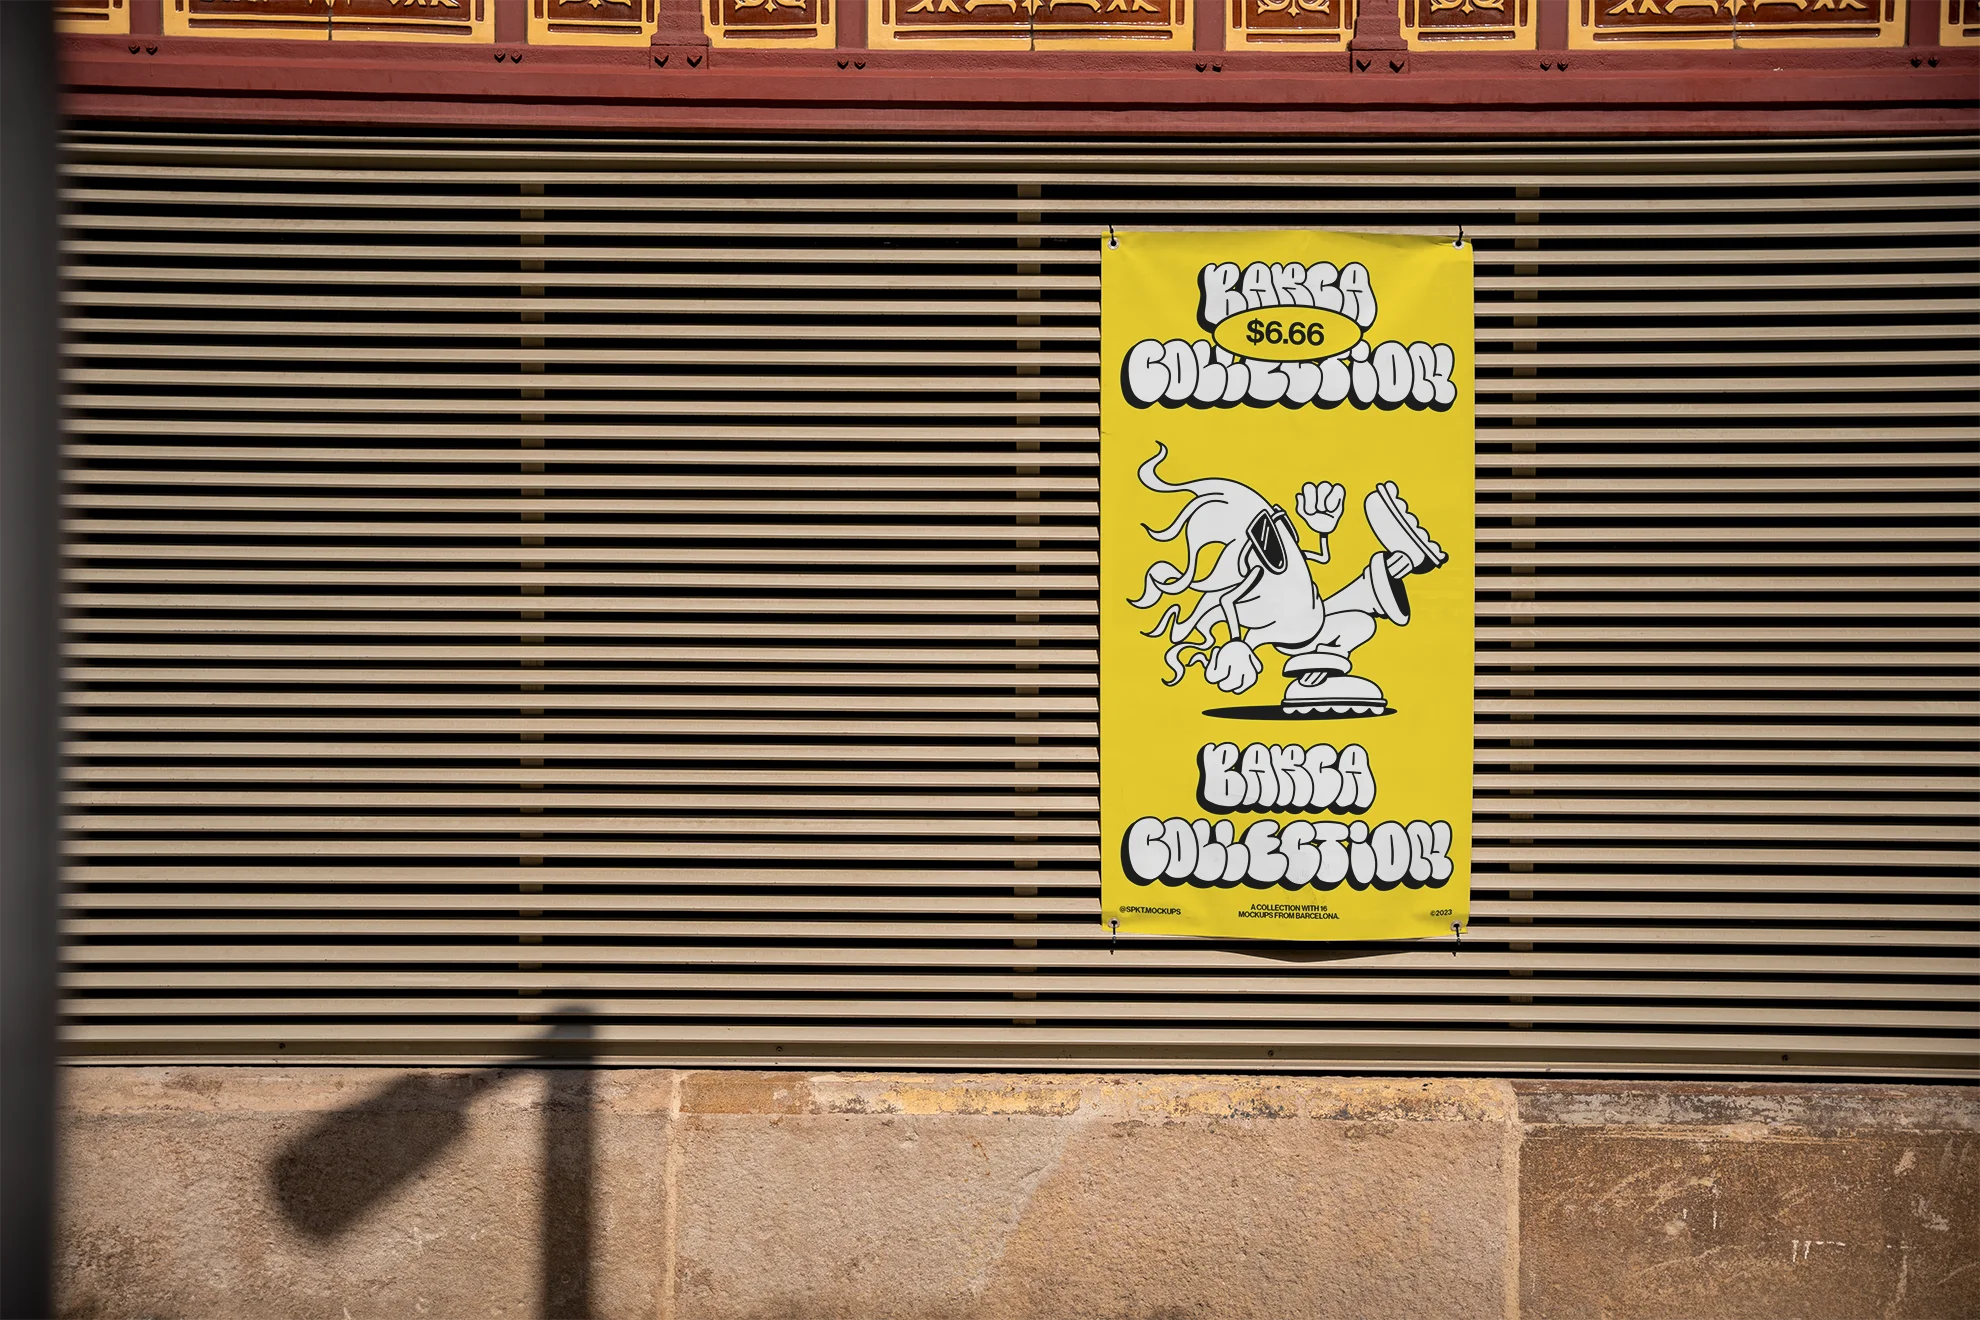 Barcelona - Grated wall